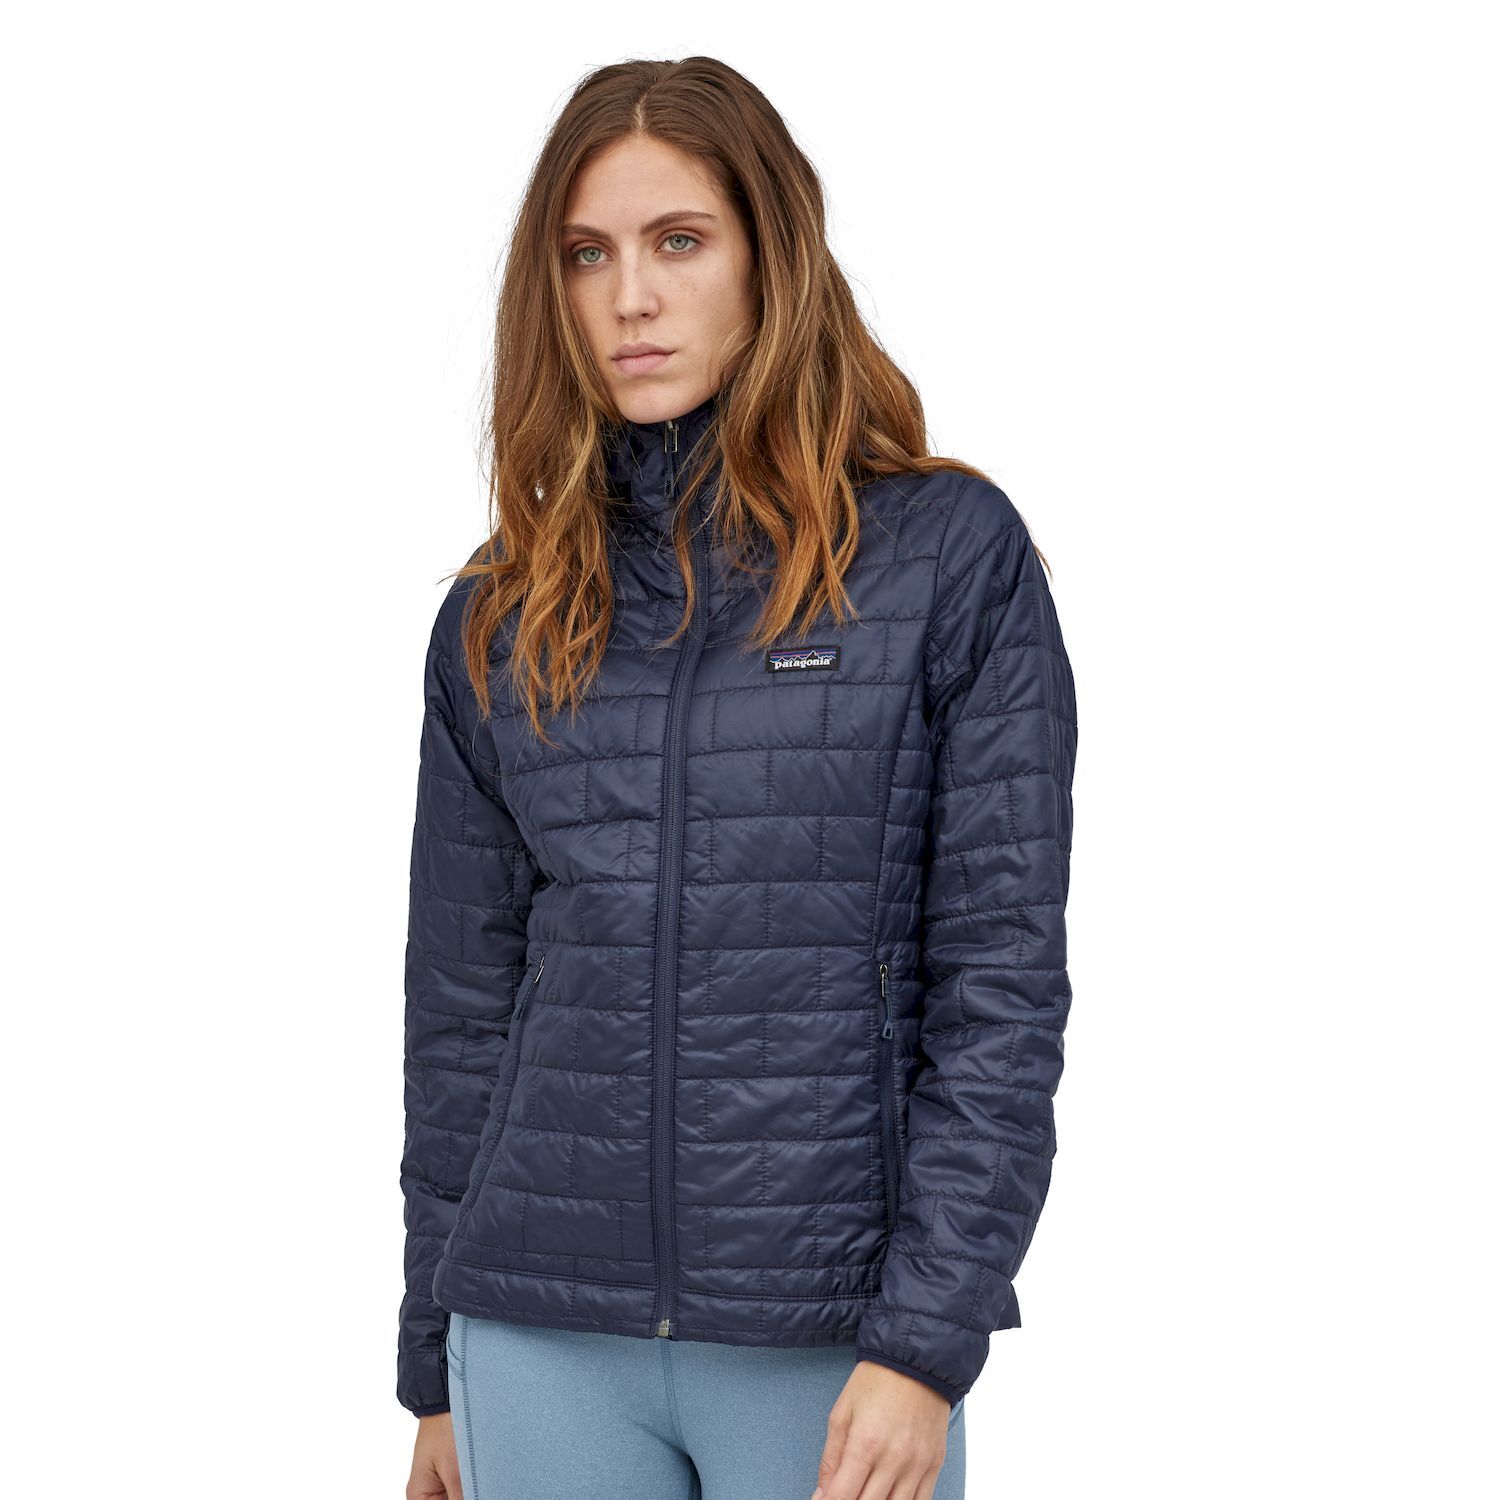 Patagonia - Nano Puff® Hoody - Insulated jacket - Women's